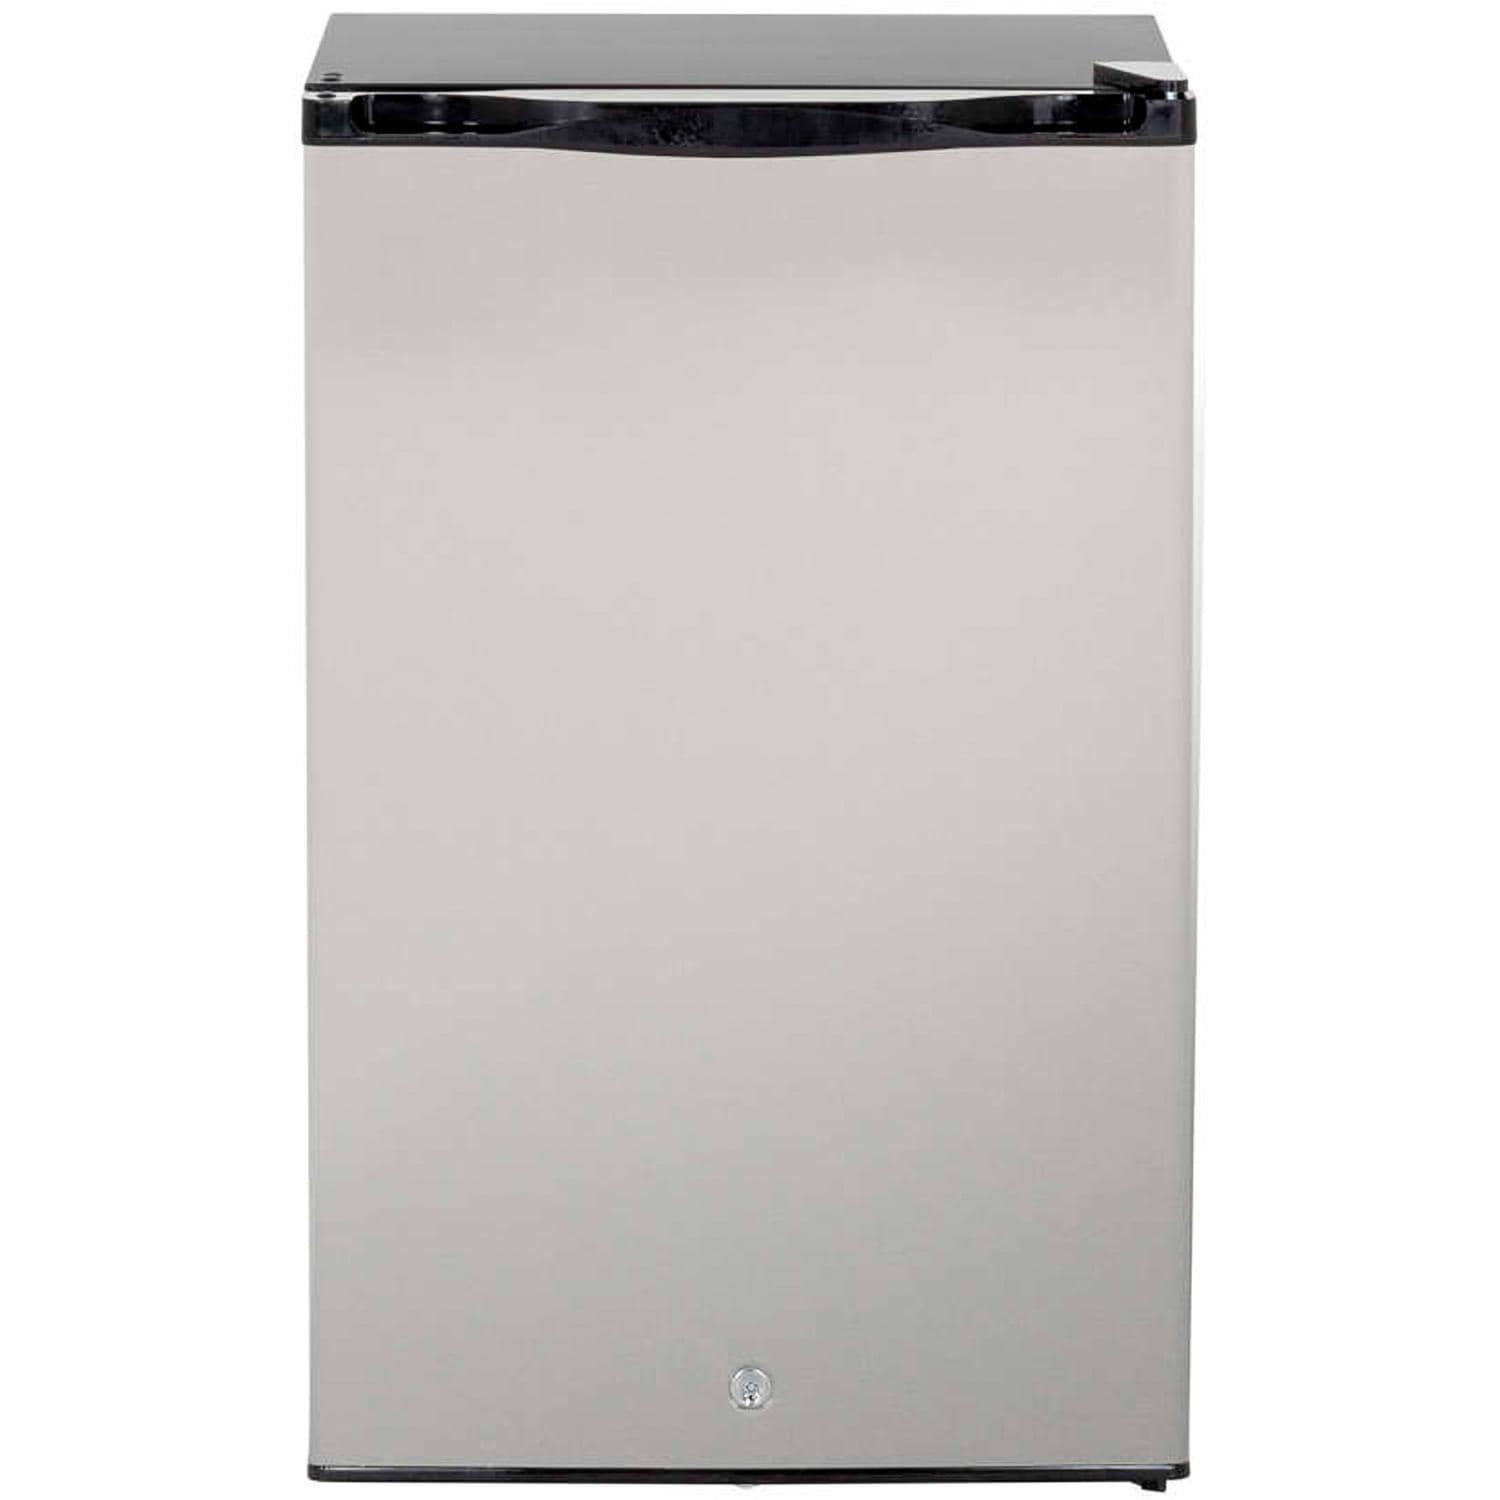 Mini Fridge Stand Universal Refrigerator Stand Adjustable Stand Base FU9721  Silver